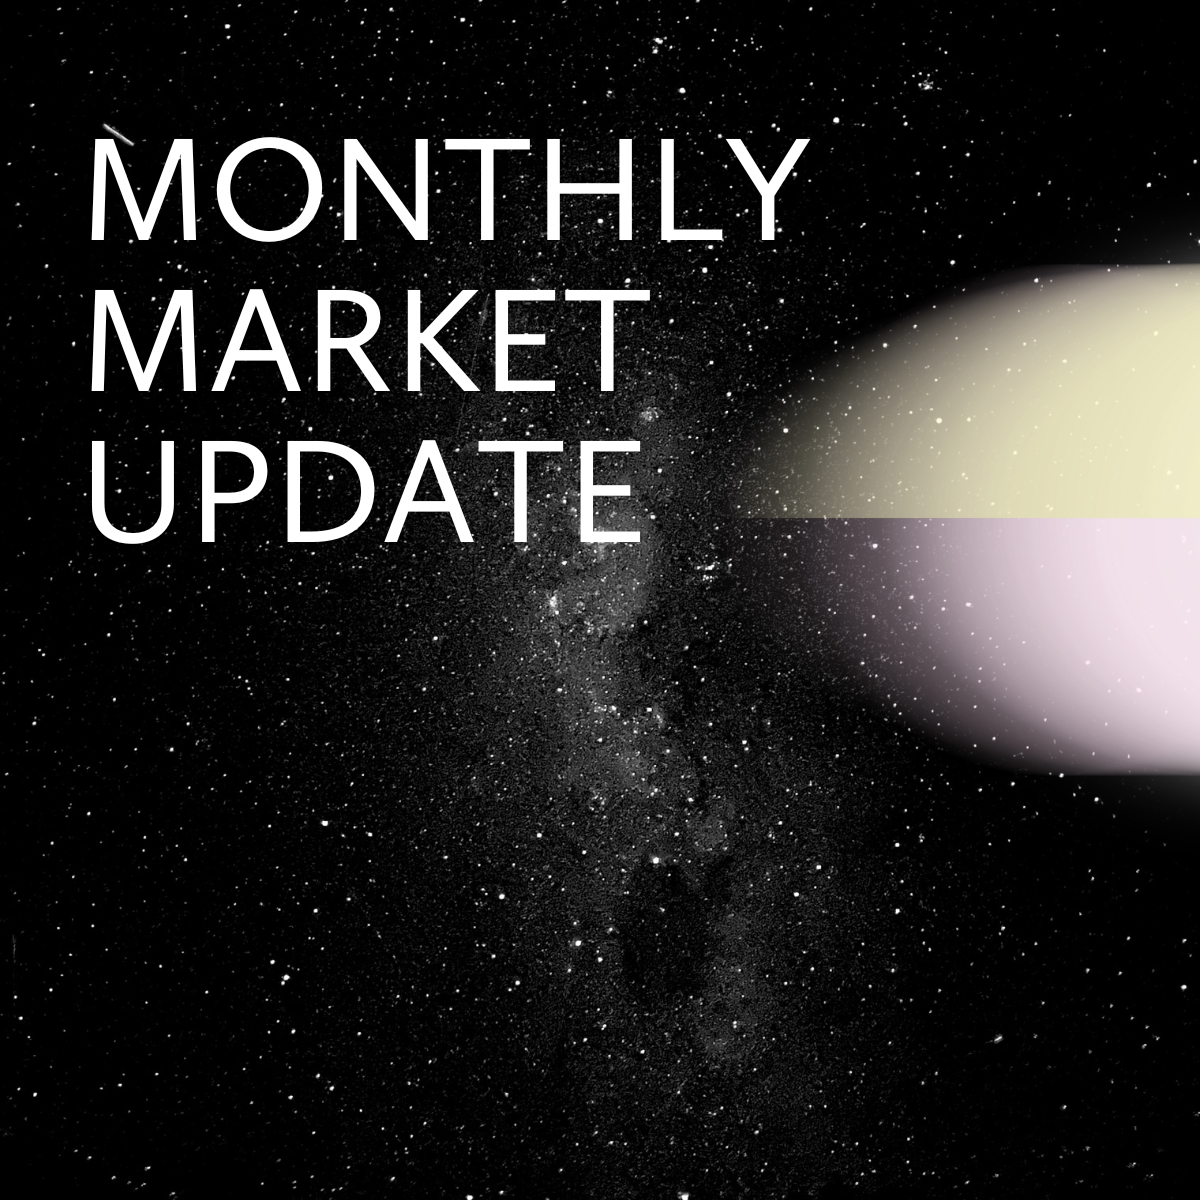 Financial Markets Update: March